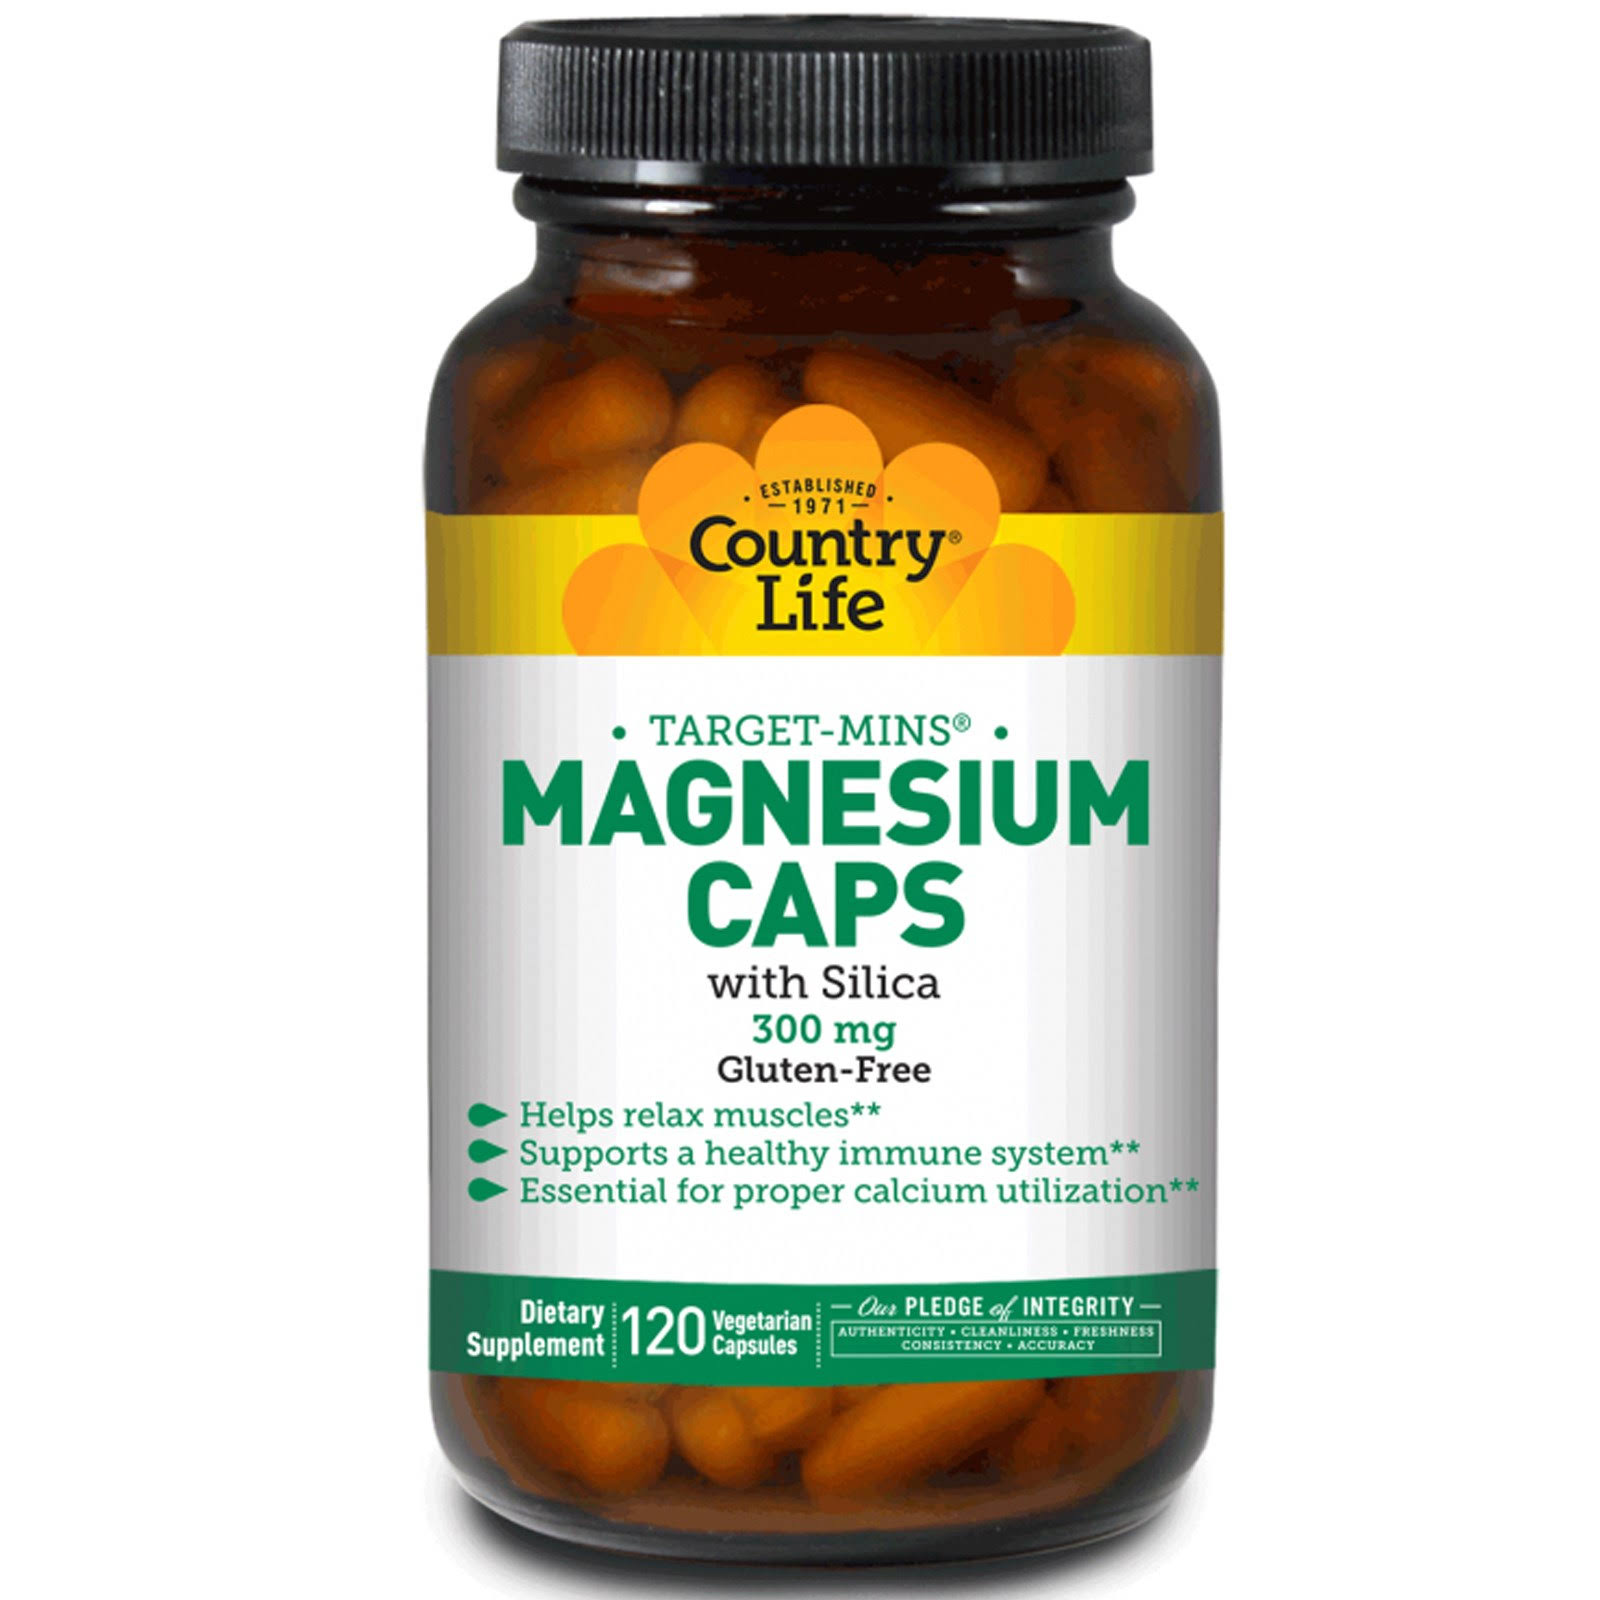 Country Life Magnesium Caps - 300mg, 120 Capsules